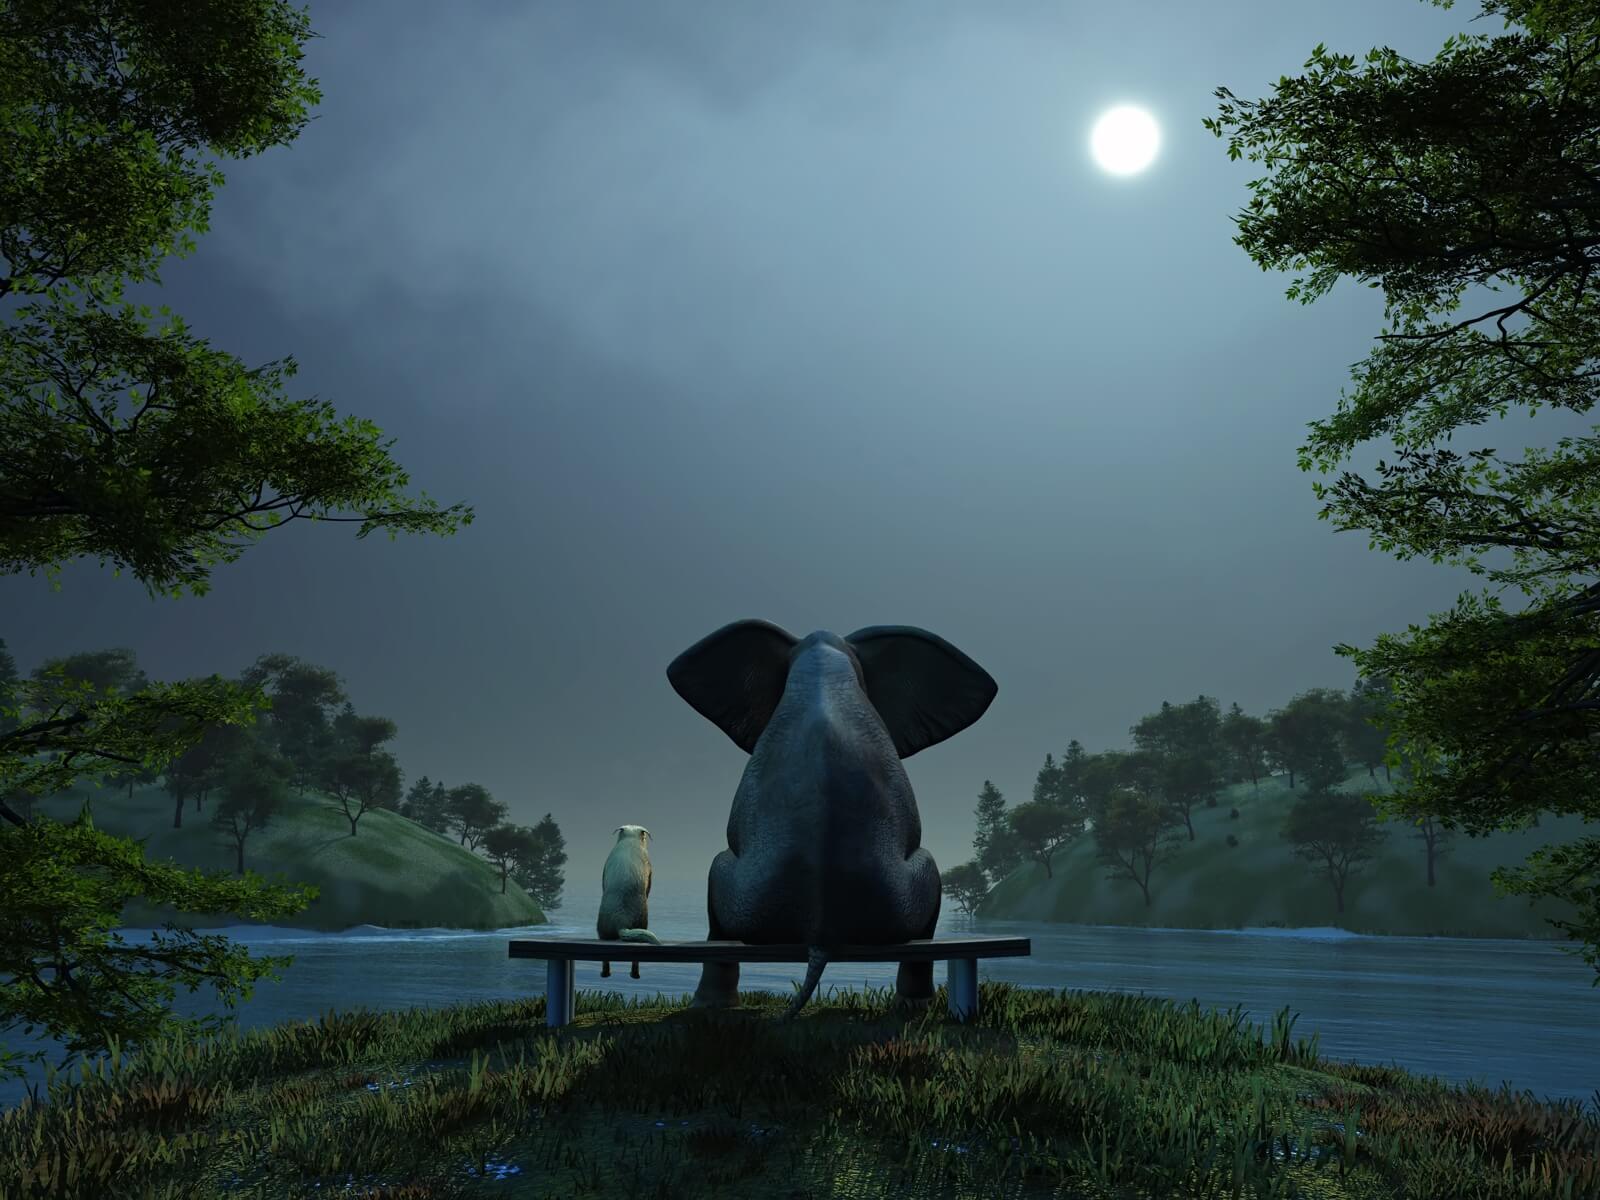 Vlies Tapete Fototapete Elefant Hund Freundschaft bei Nacht